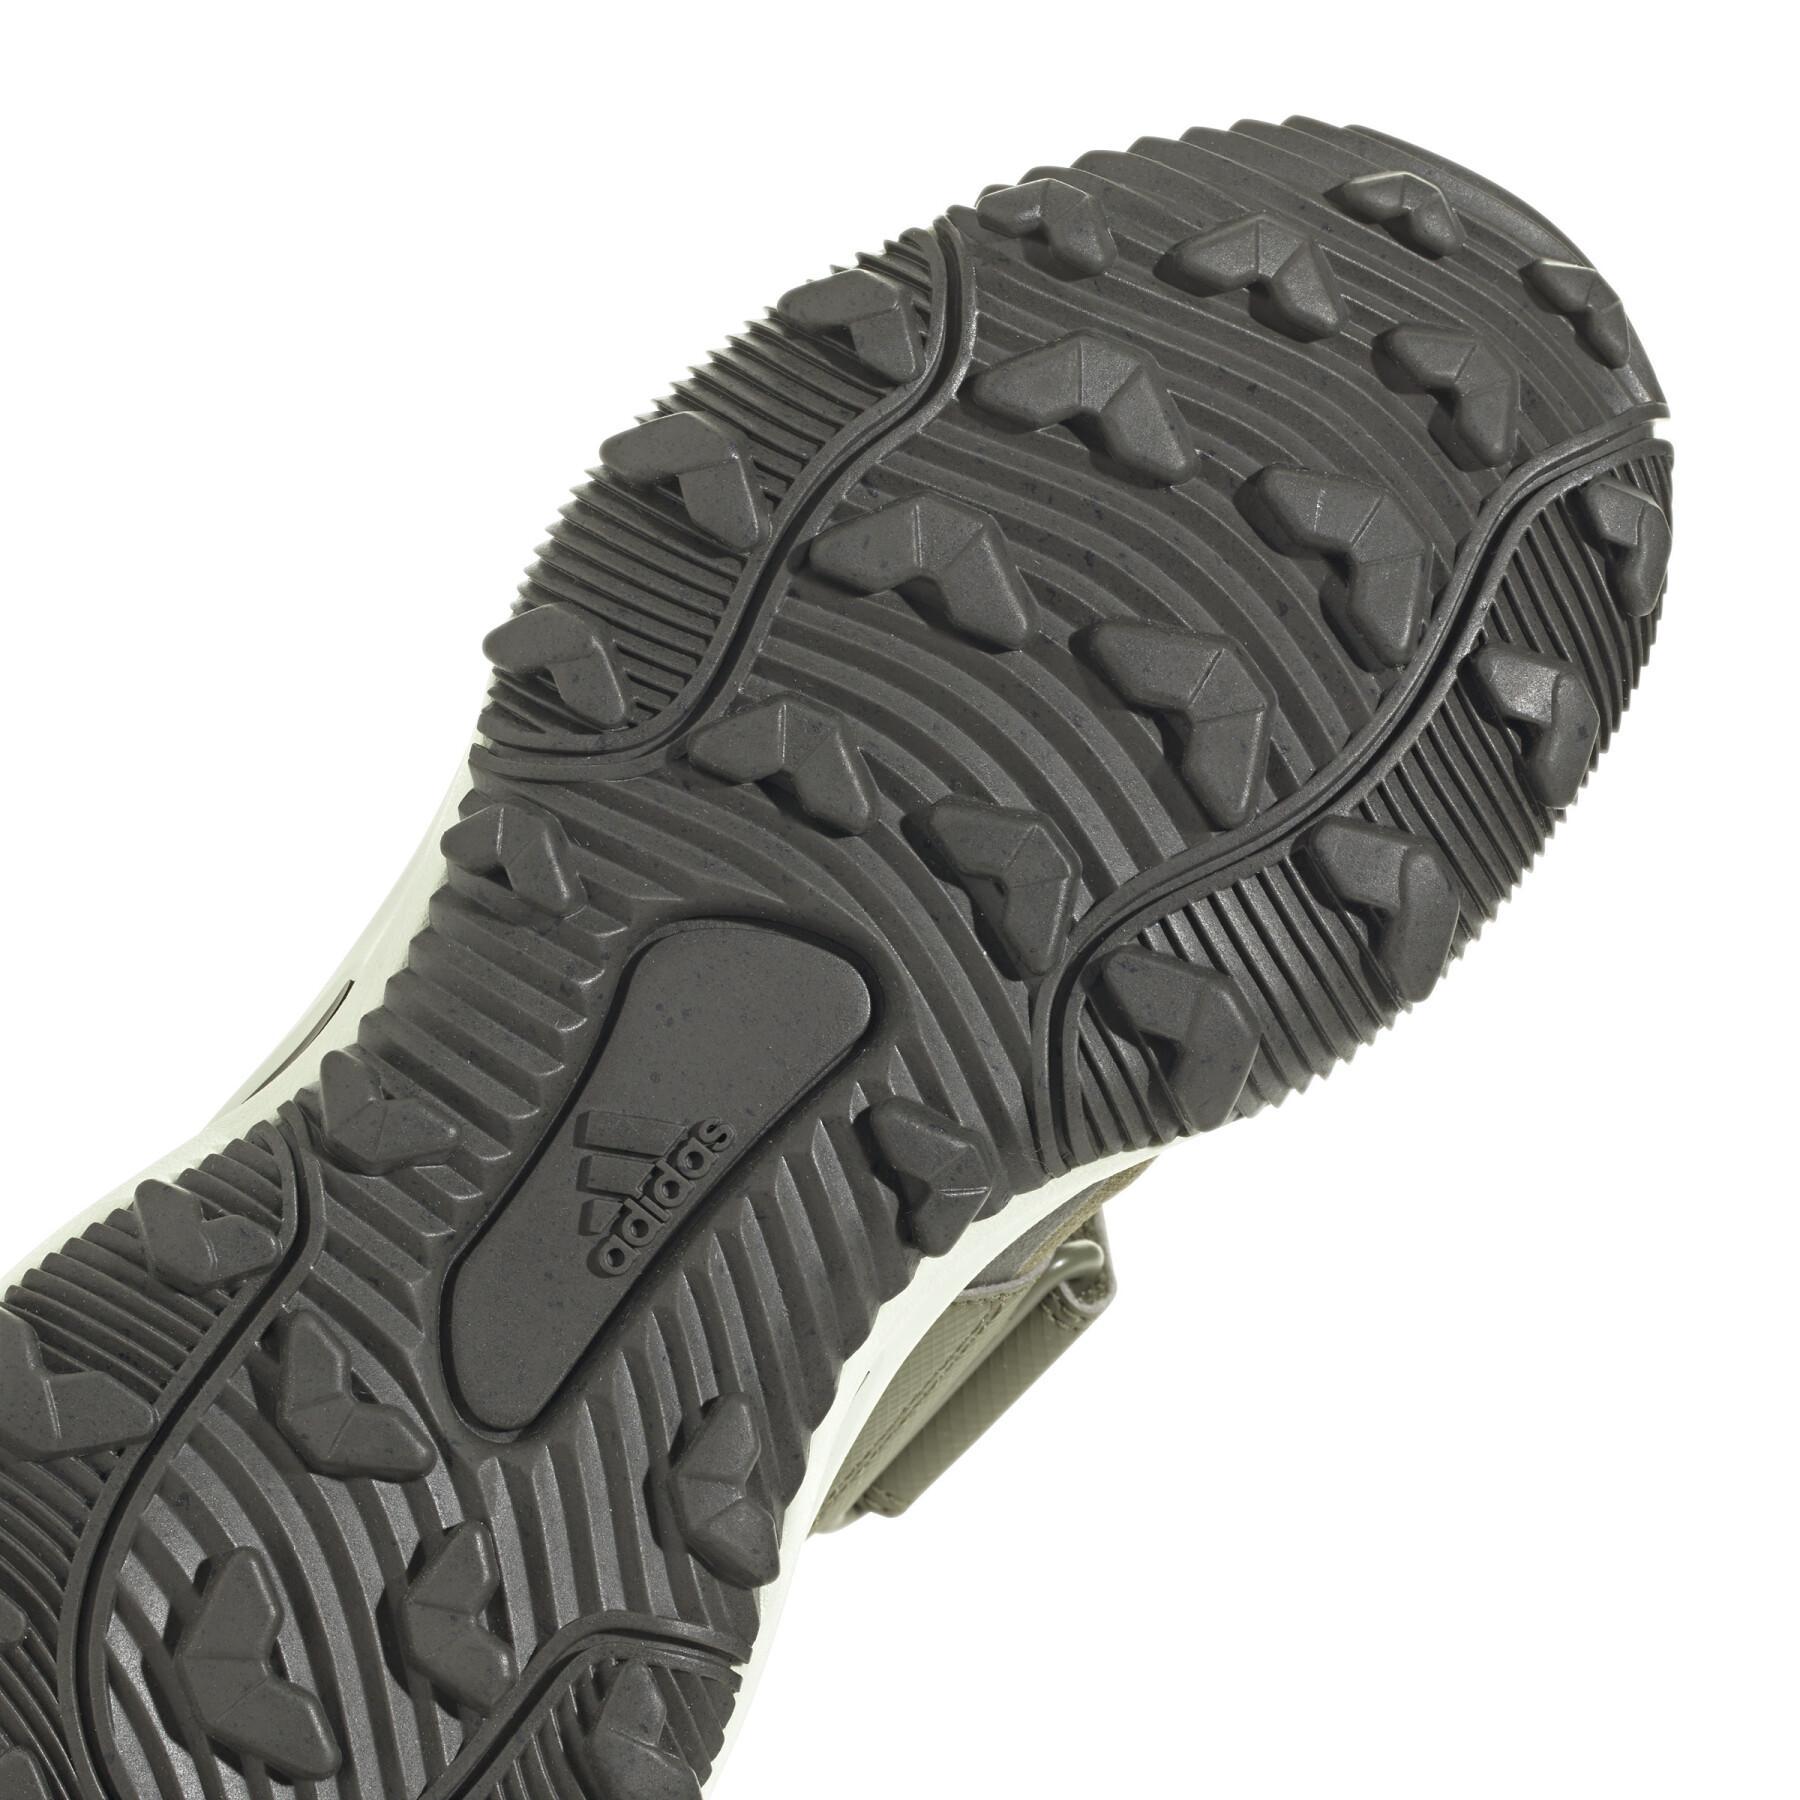 Sapatos de corrida para crianças adidas FortaRun All-Terrain Cloudfoam Sport